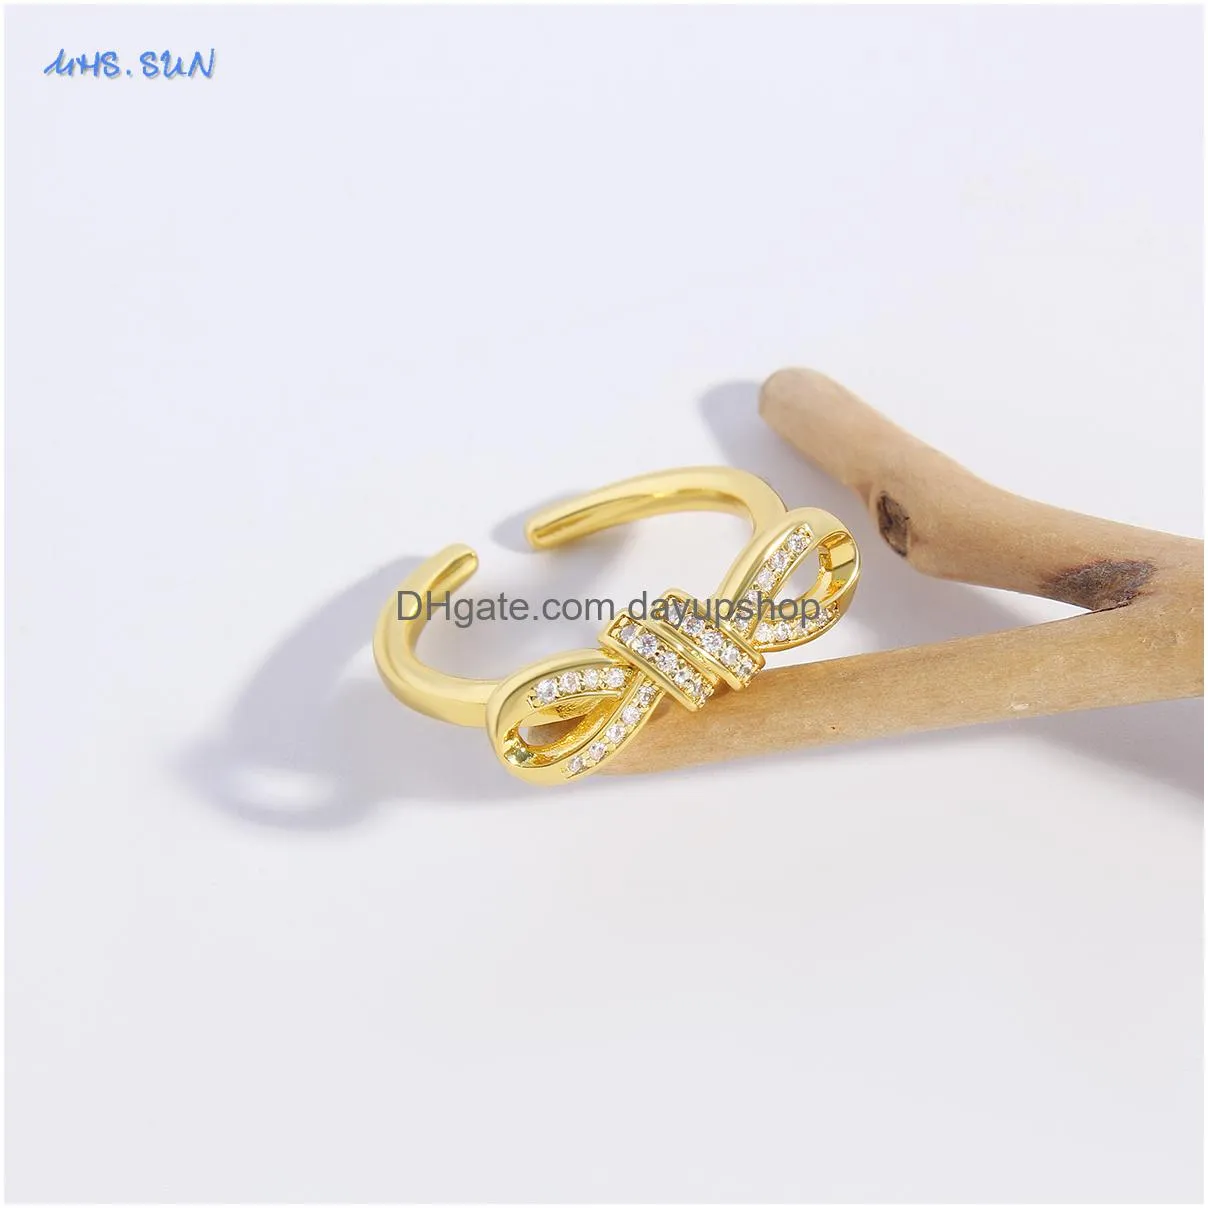 mhs.sun romantic cubic zircon twist butterfly knot finger rings for women girls 18k true gold plated wedding party jewelry